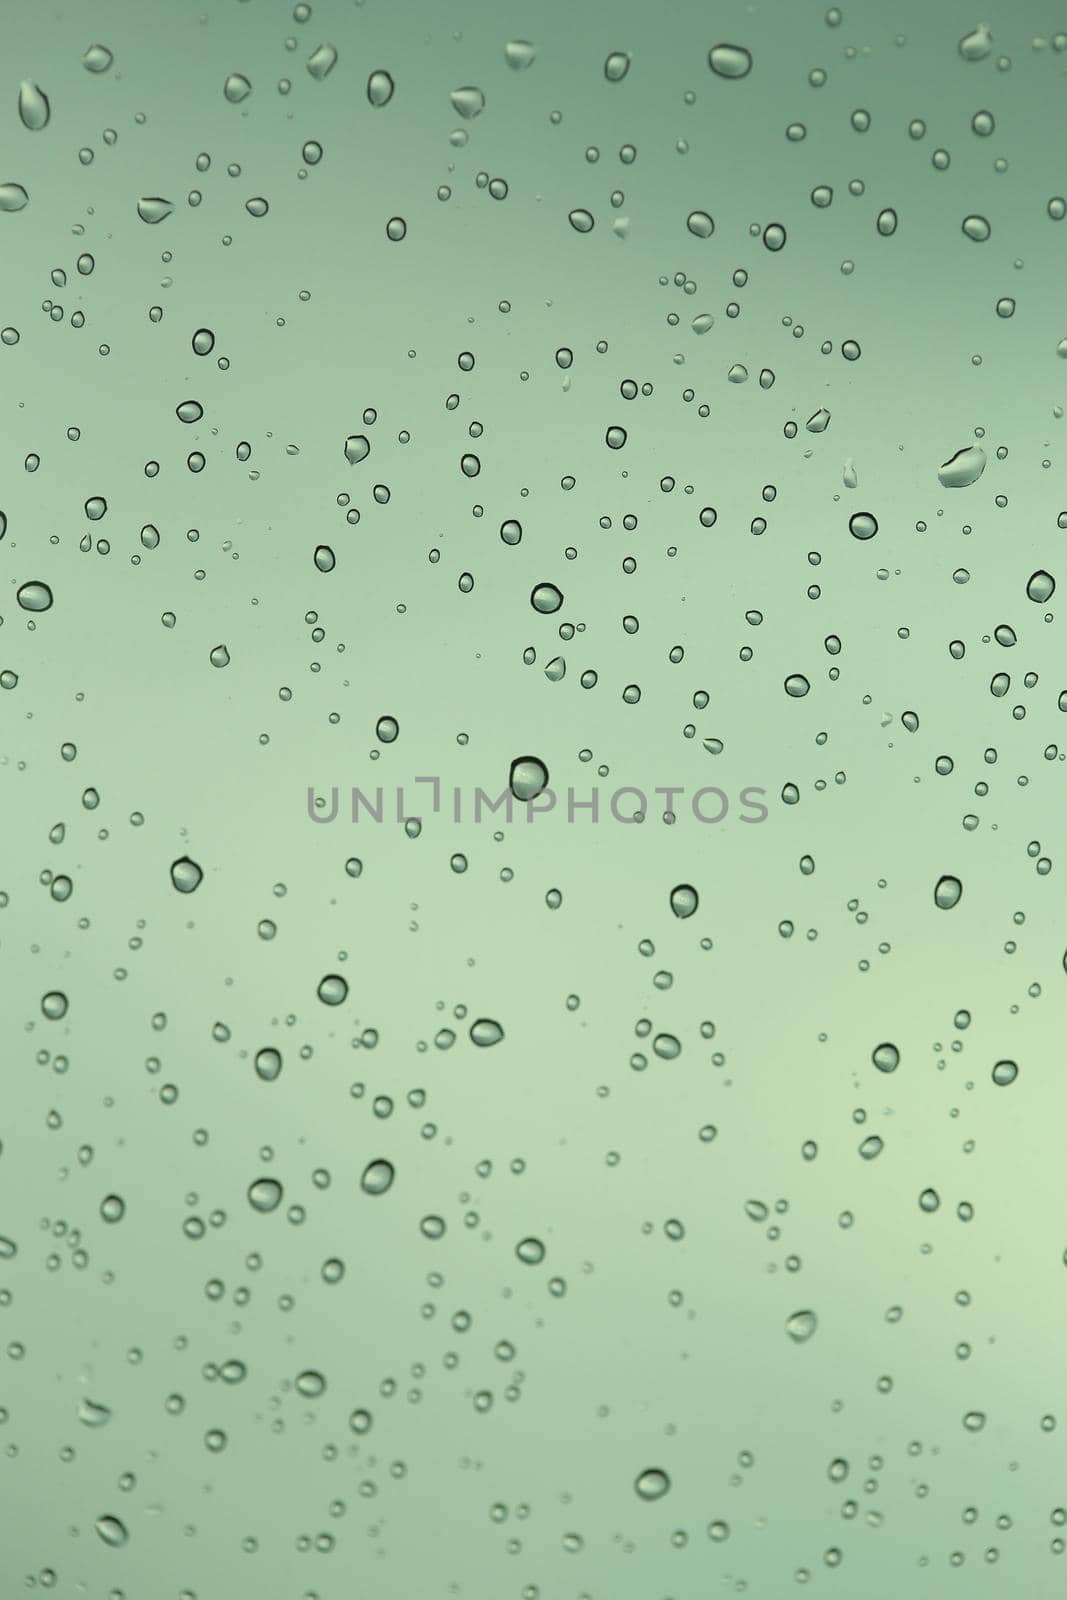 fressh background of water drops  by geargodz